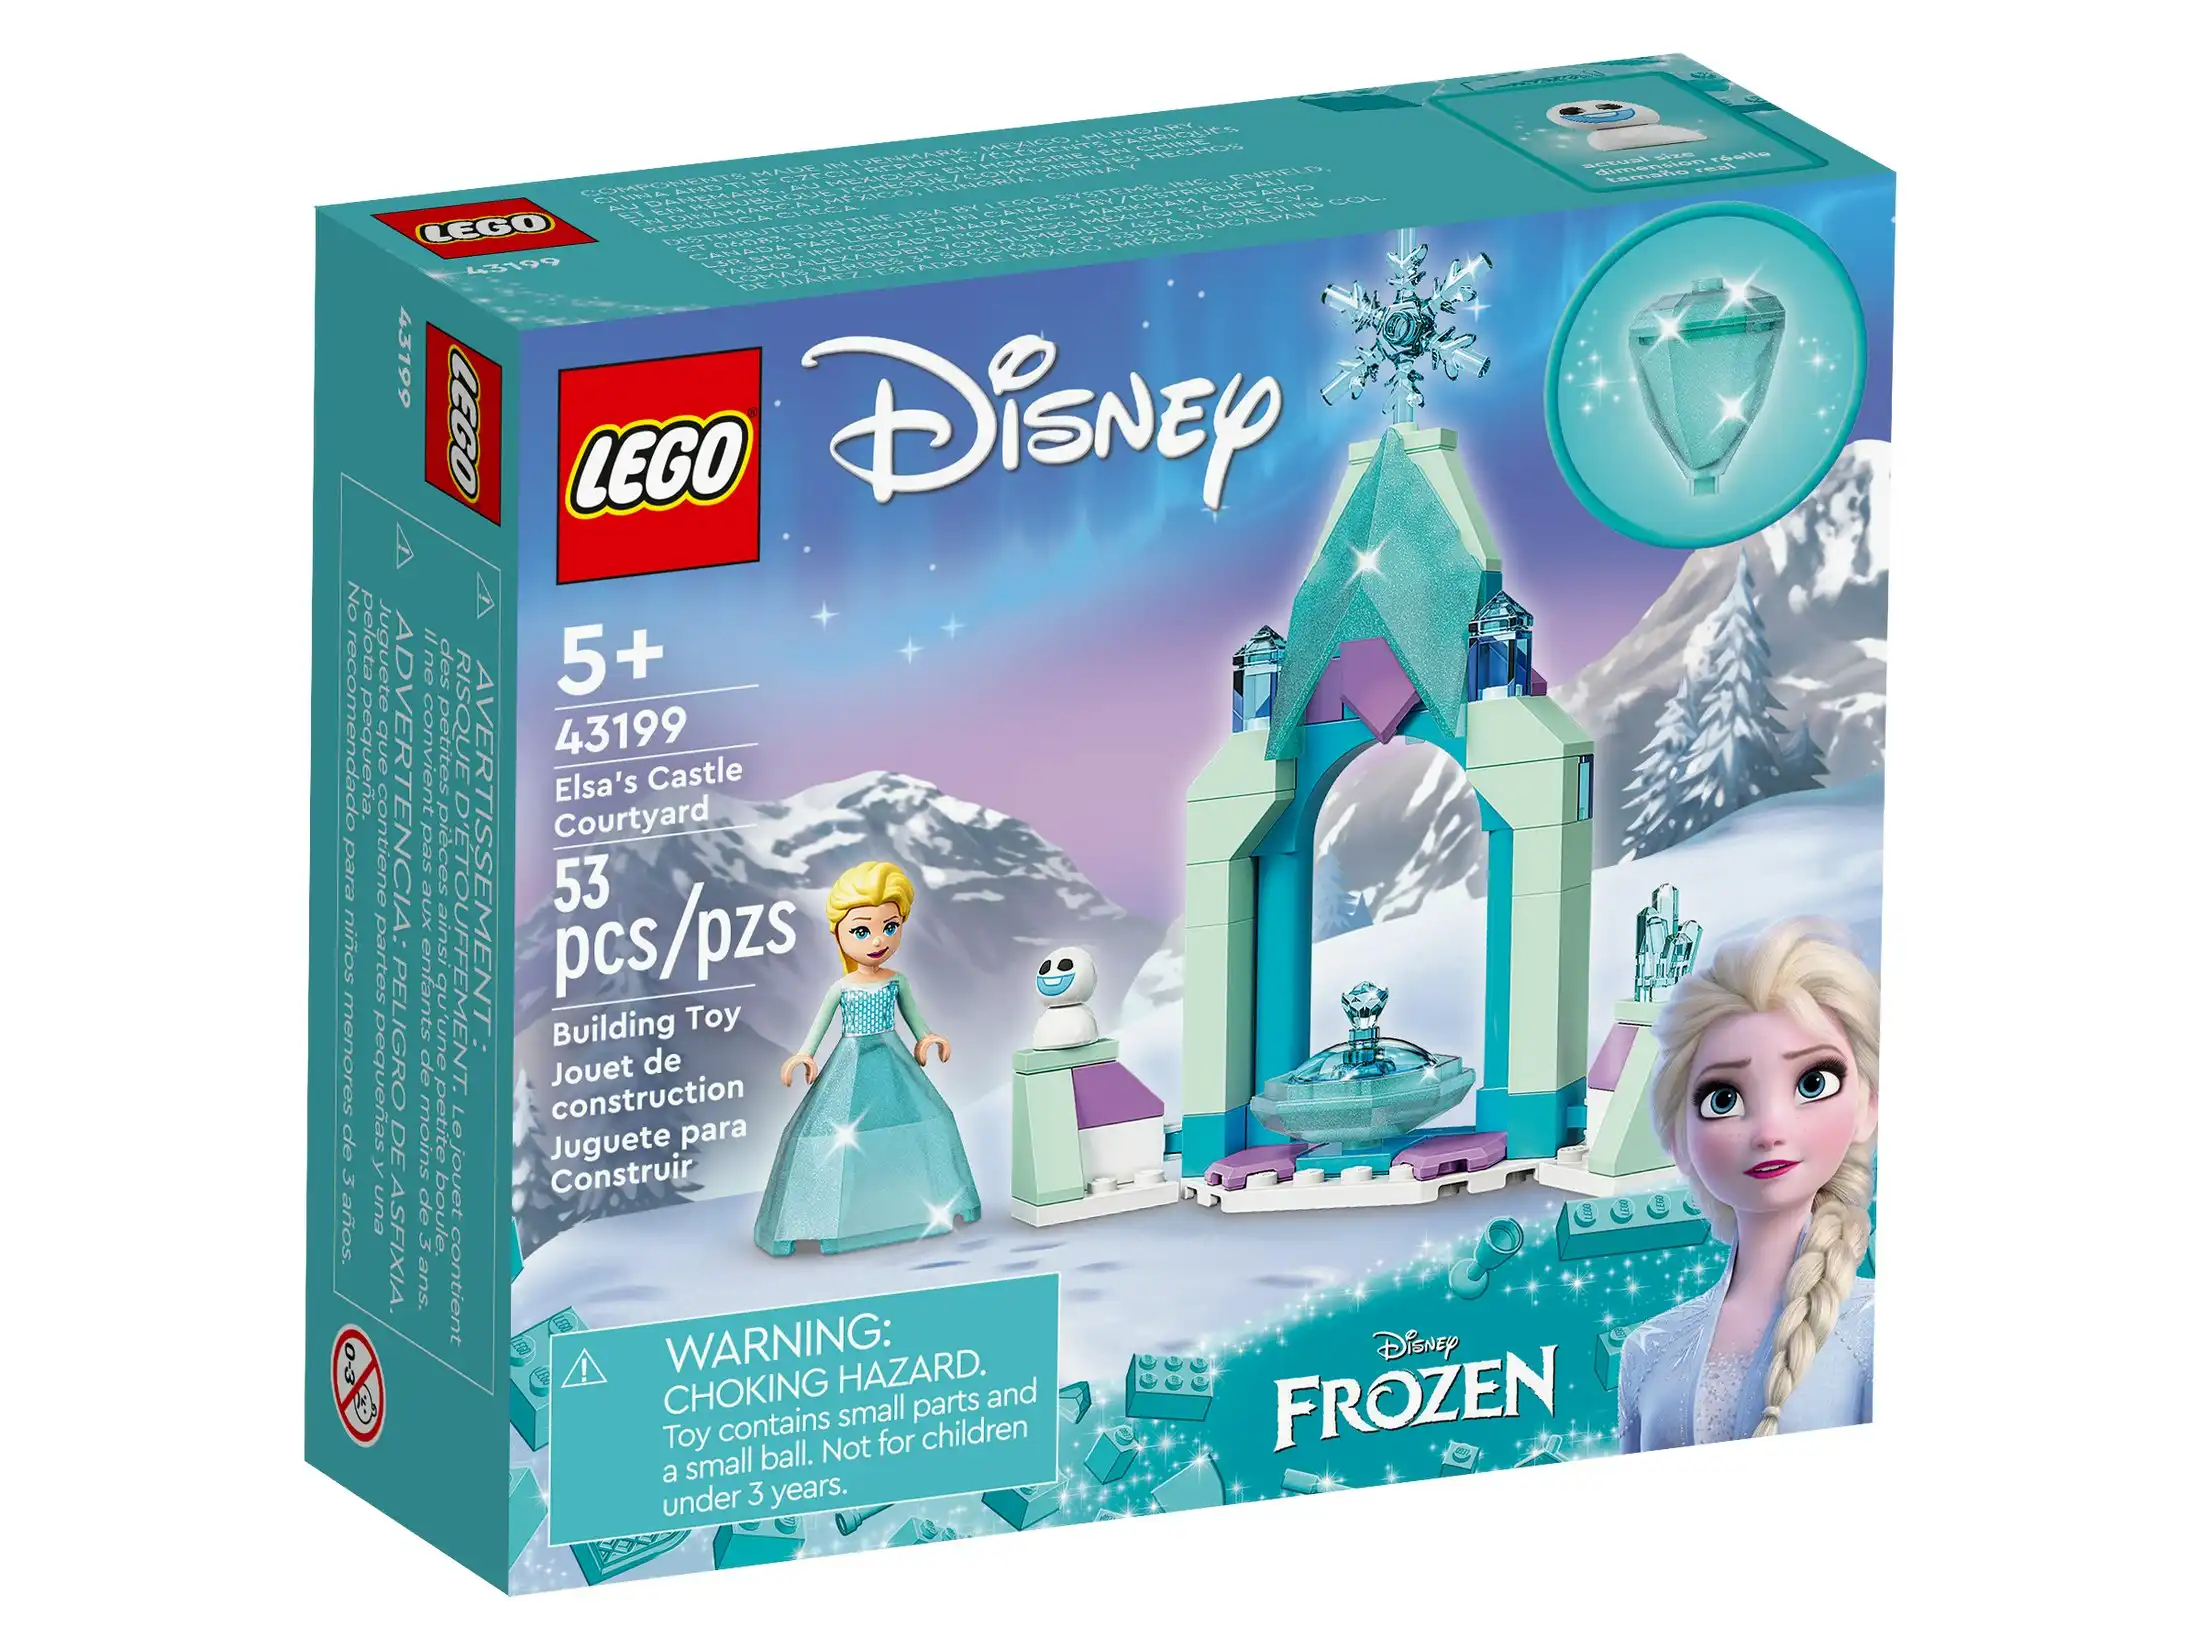 LEGO 43199 Elsa’s Castle Courtyard - Disney Princess